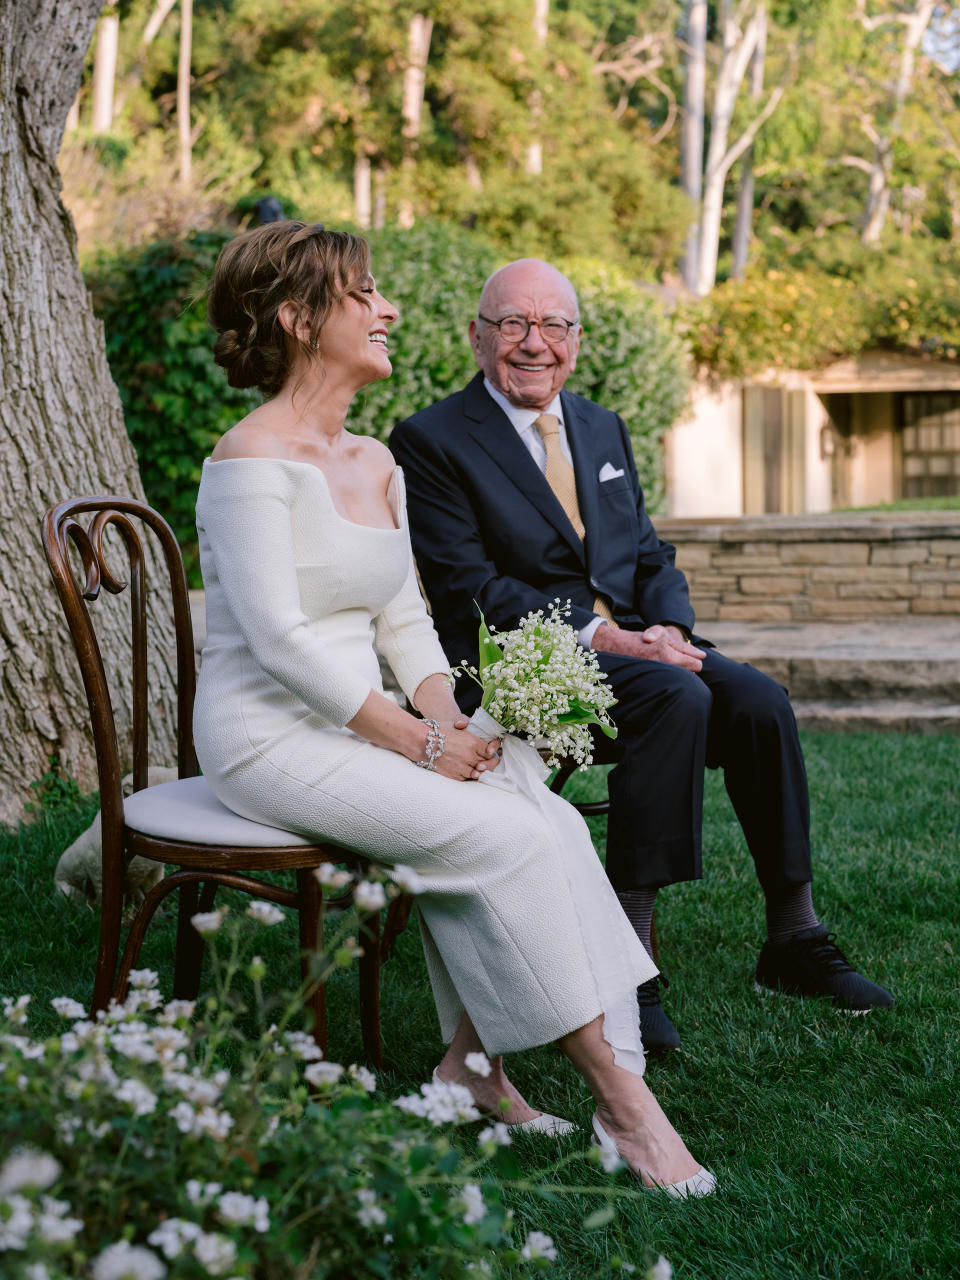 Rupert Murdoch and Elena Zhukova at their June 1 wedding.